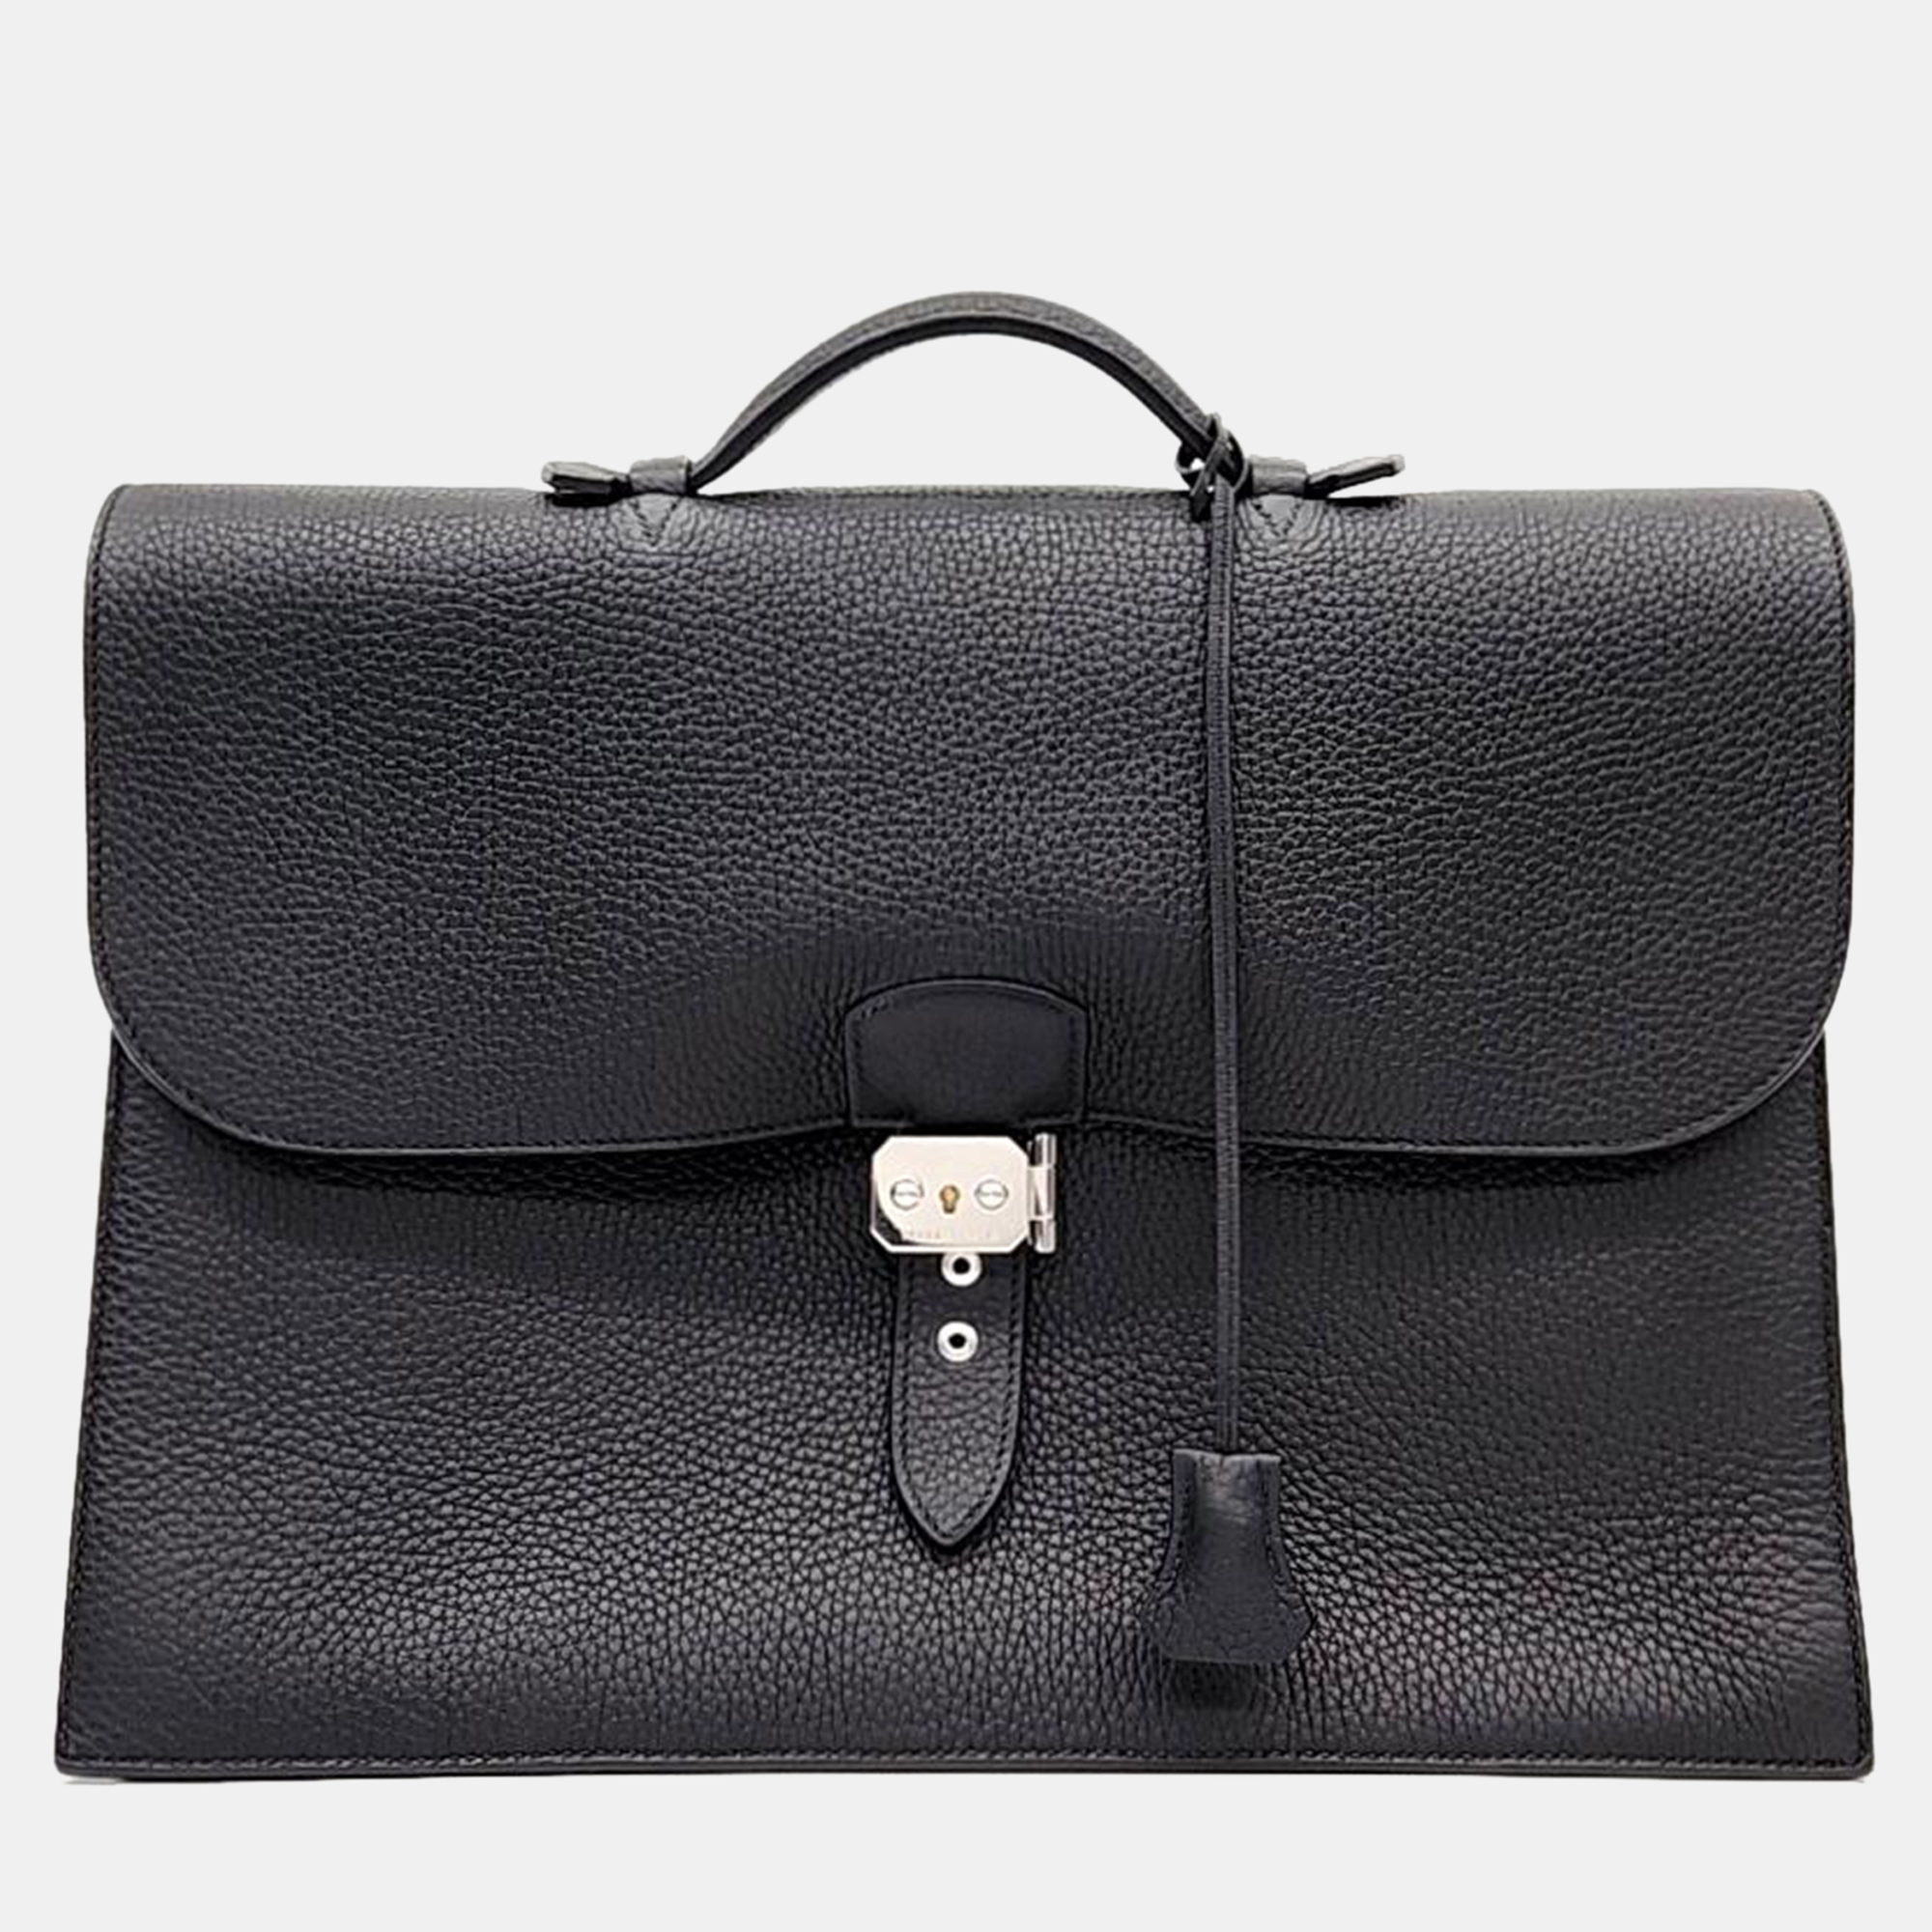 Hermes black leather sac a depeche 38 bag